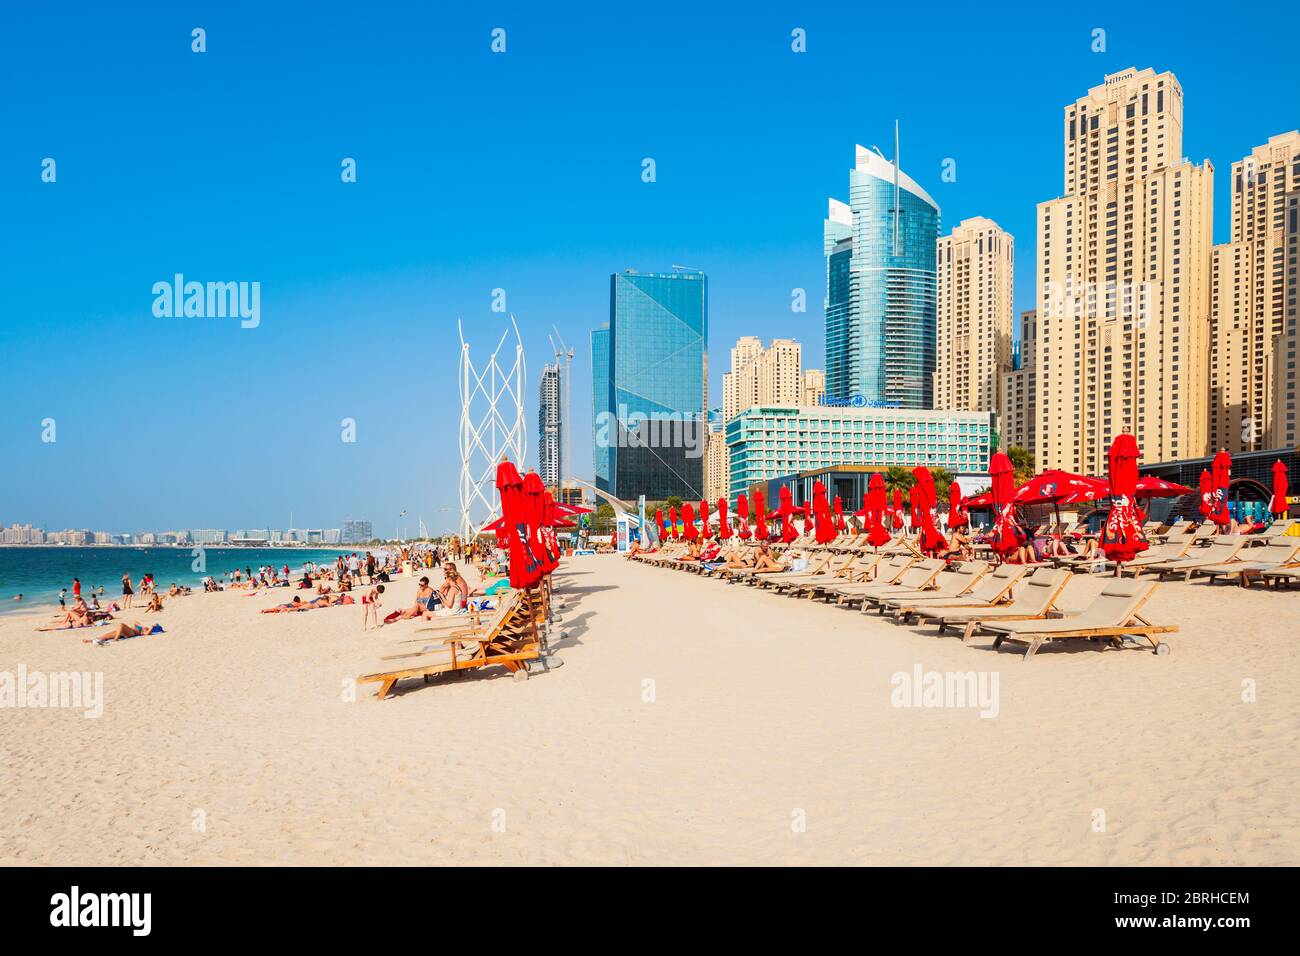 DUBAI, UAE - FEBRUARY 25, 2019: JBR or Jumeirah Beach Residence is a waterfront community located in Dubai Marina in UAE Stock Photo